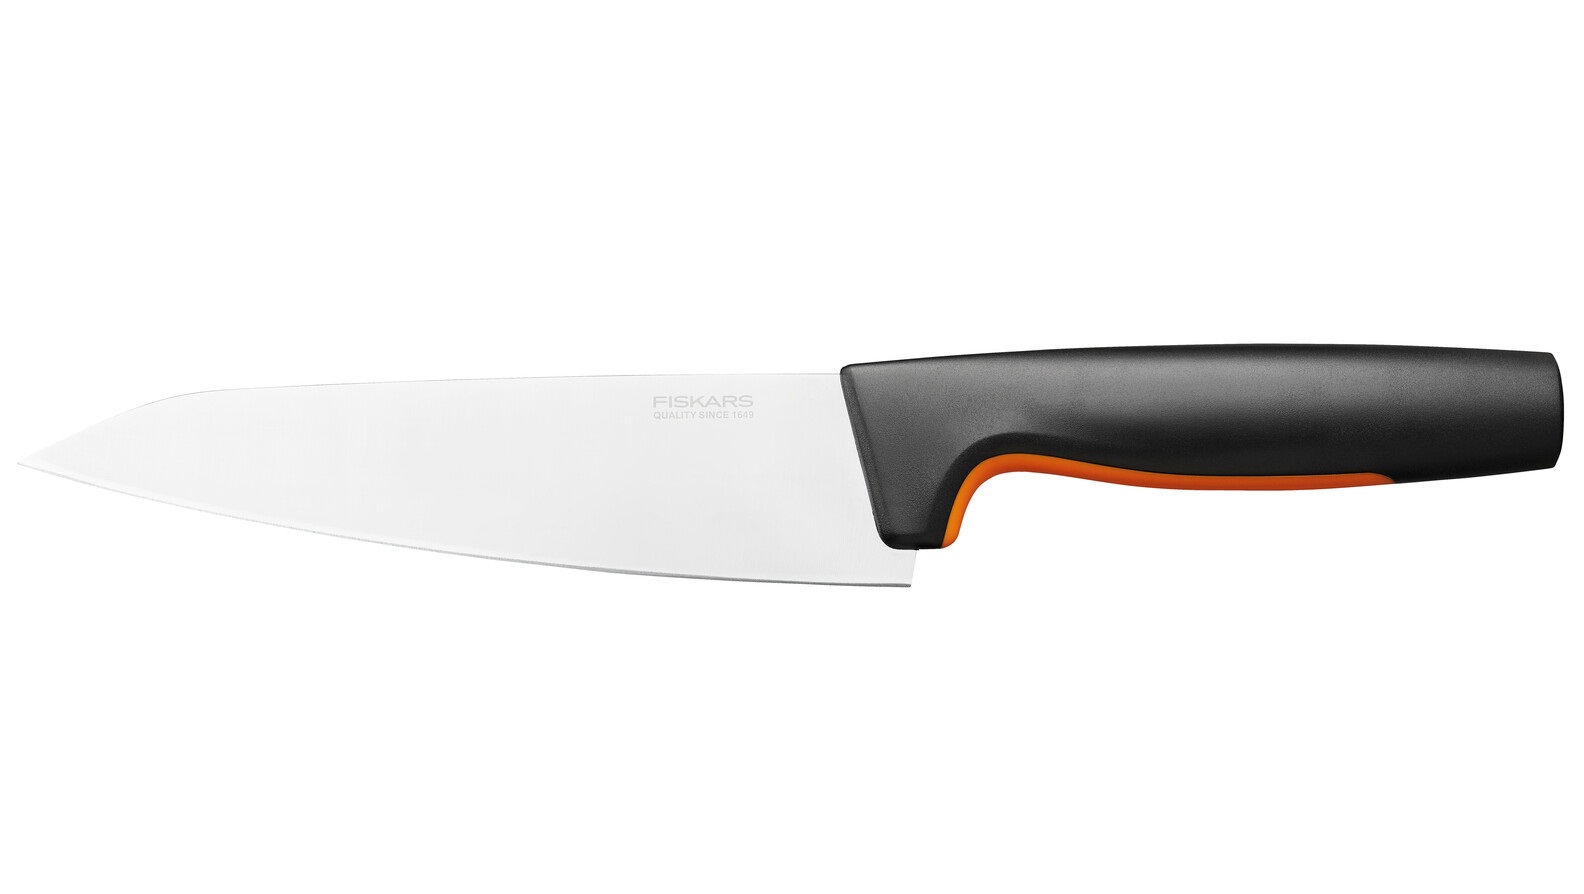 Stredný kuchársky nôž FISKARS Functional Form, 17 cm  